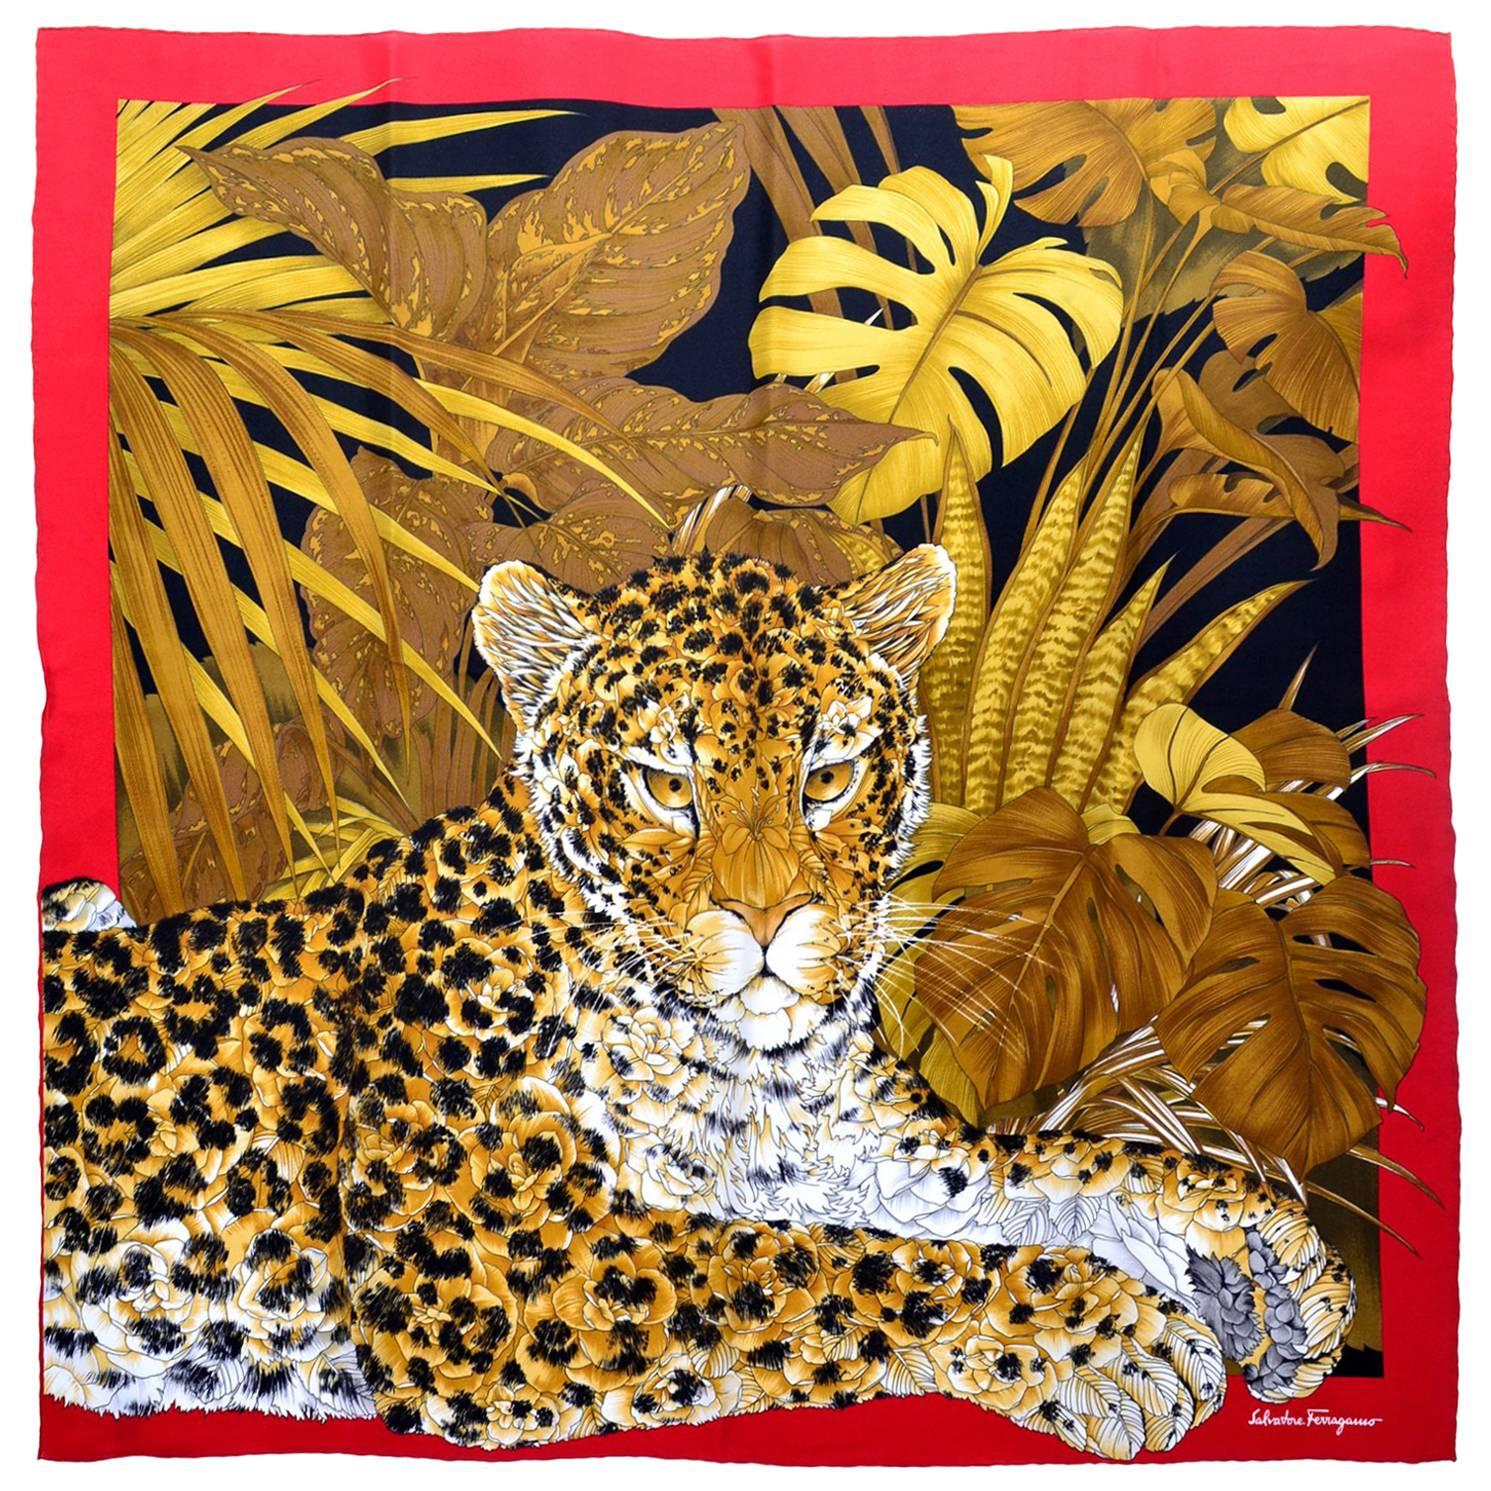 Salvatore Ferragamo Vintage Silk Scarf in Leopard Jungle Print with Red Border